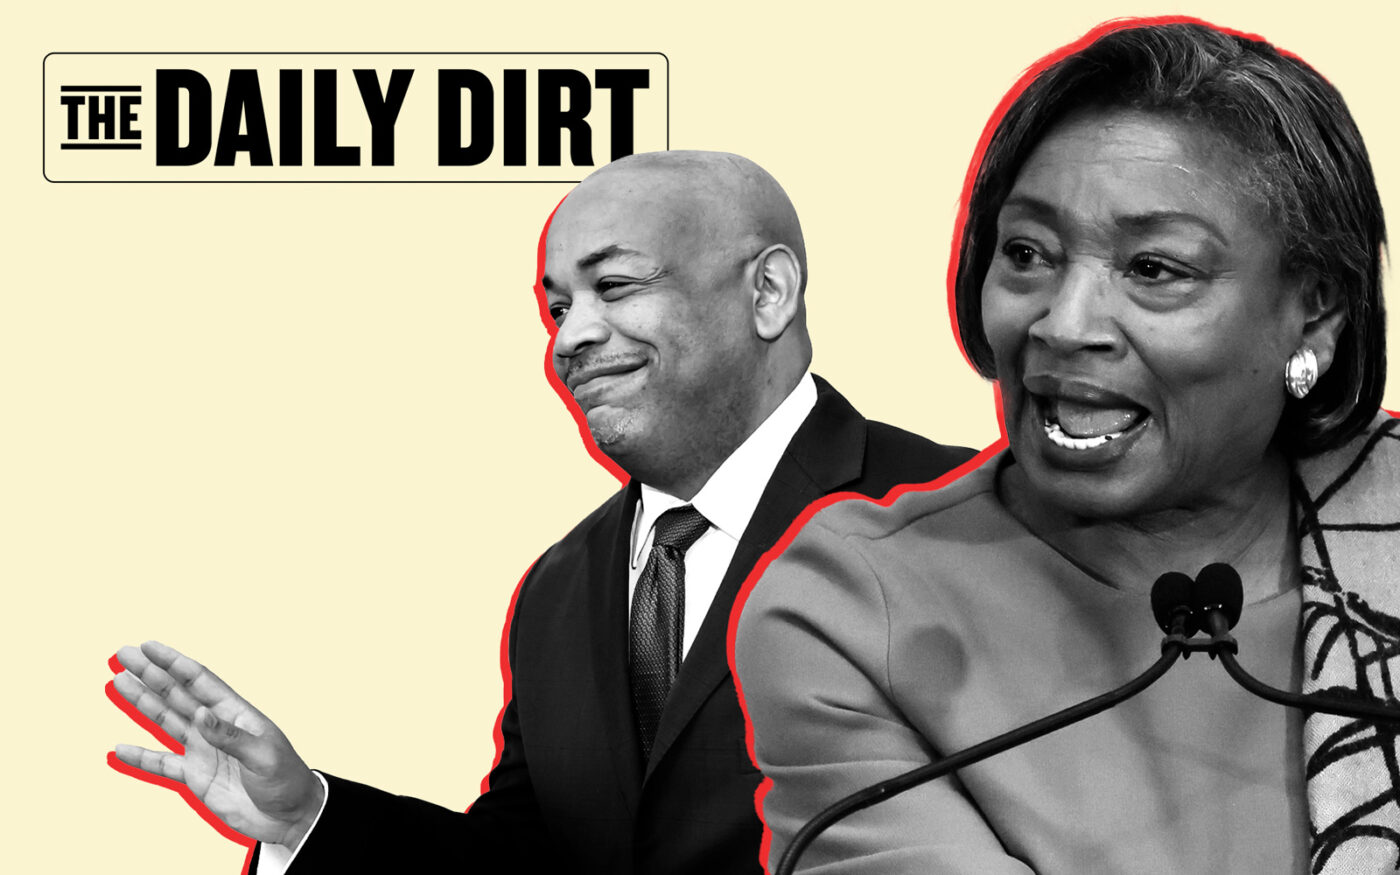 New York Legislative Session Begins: The Daily Dirt